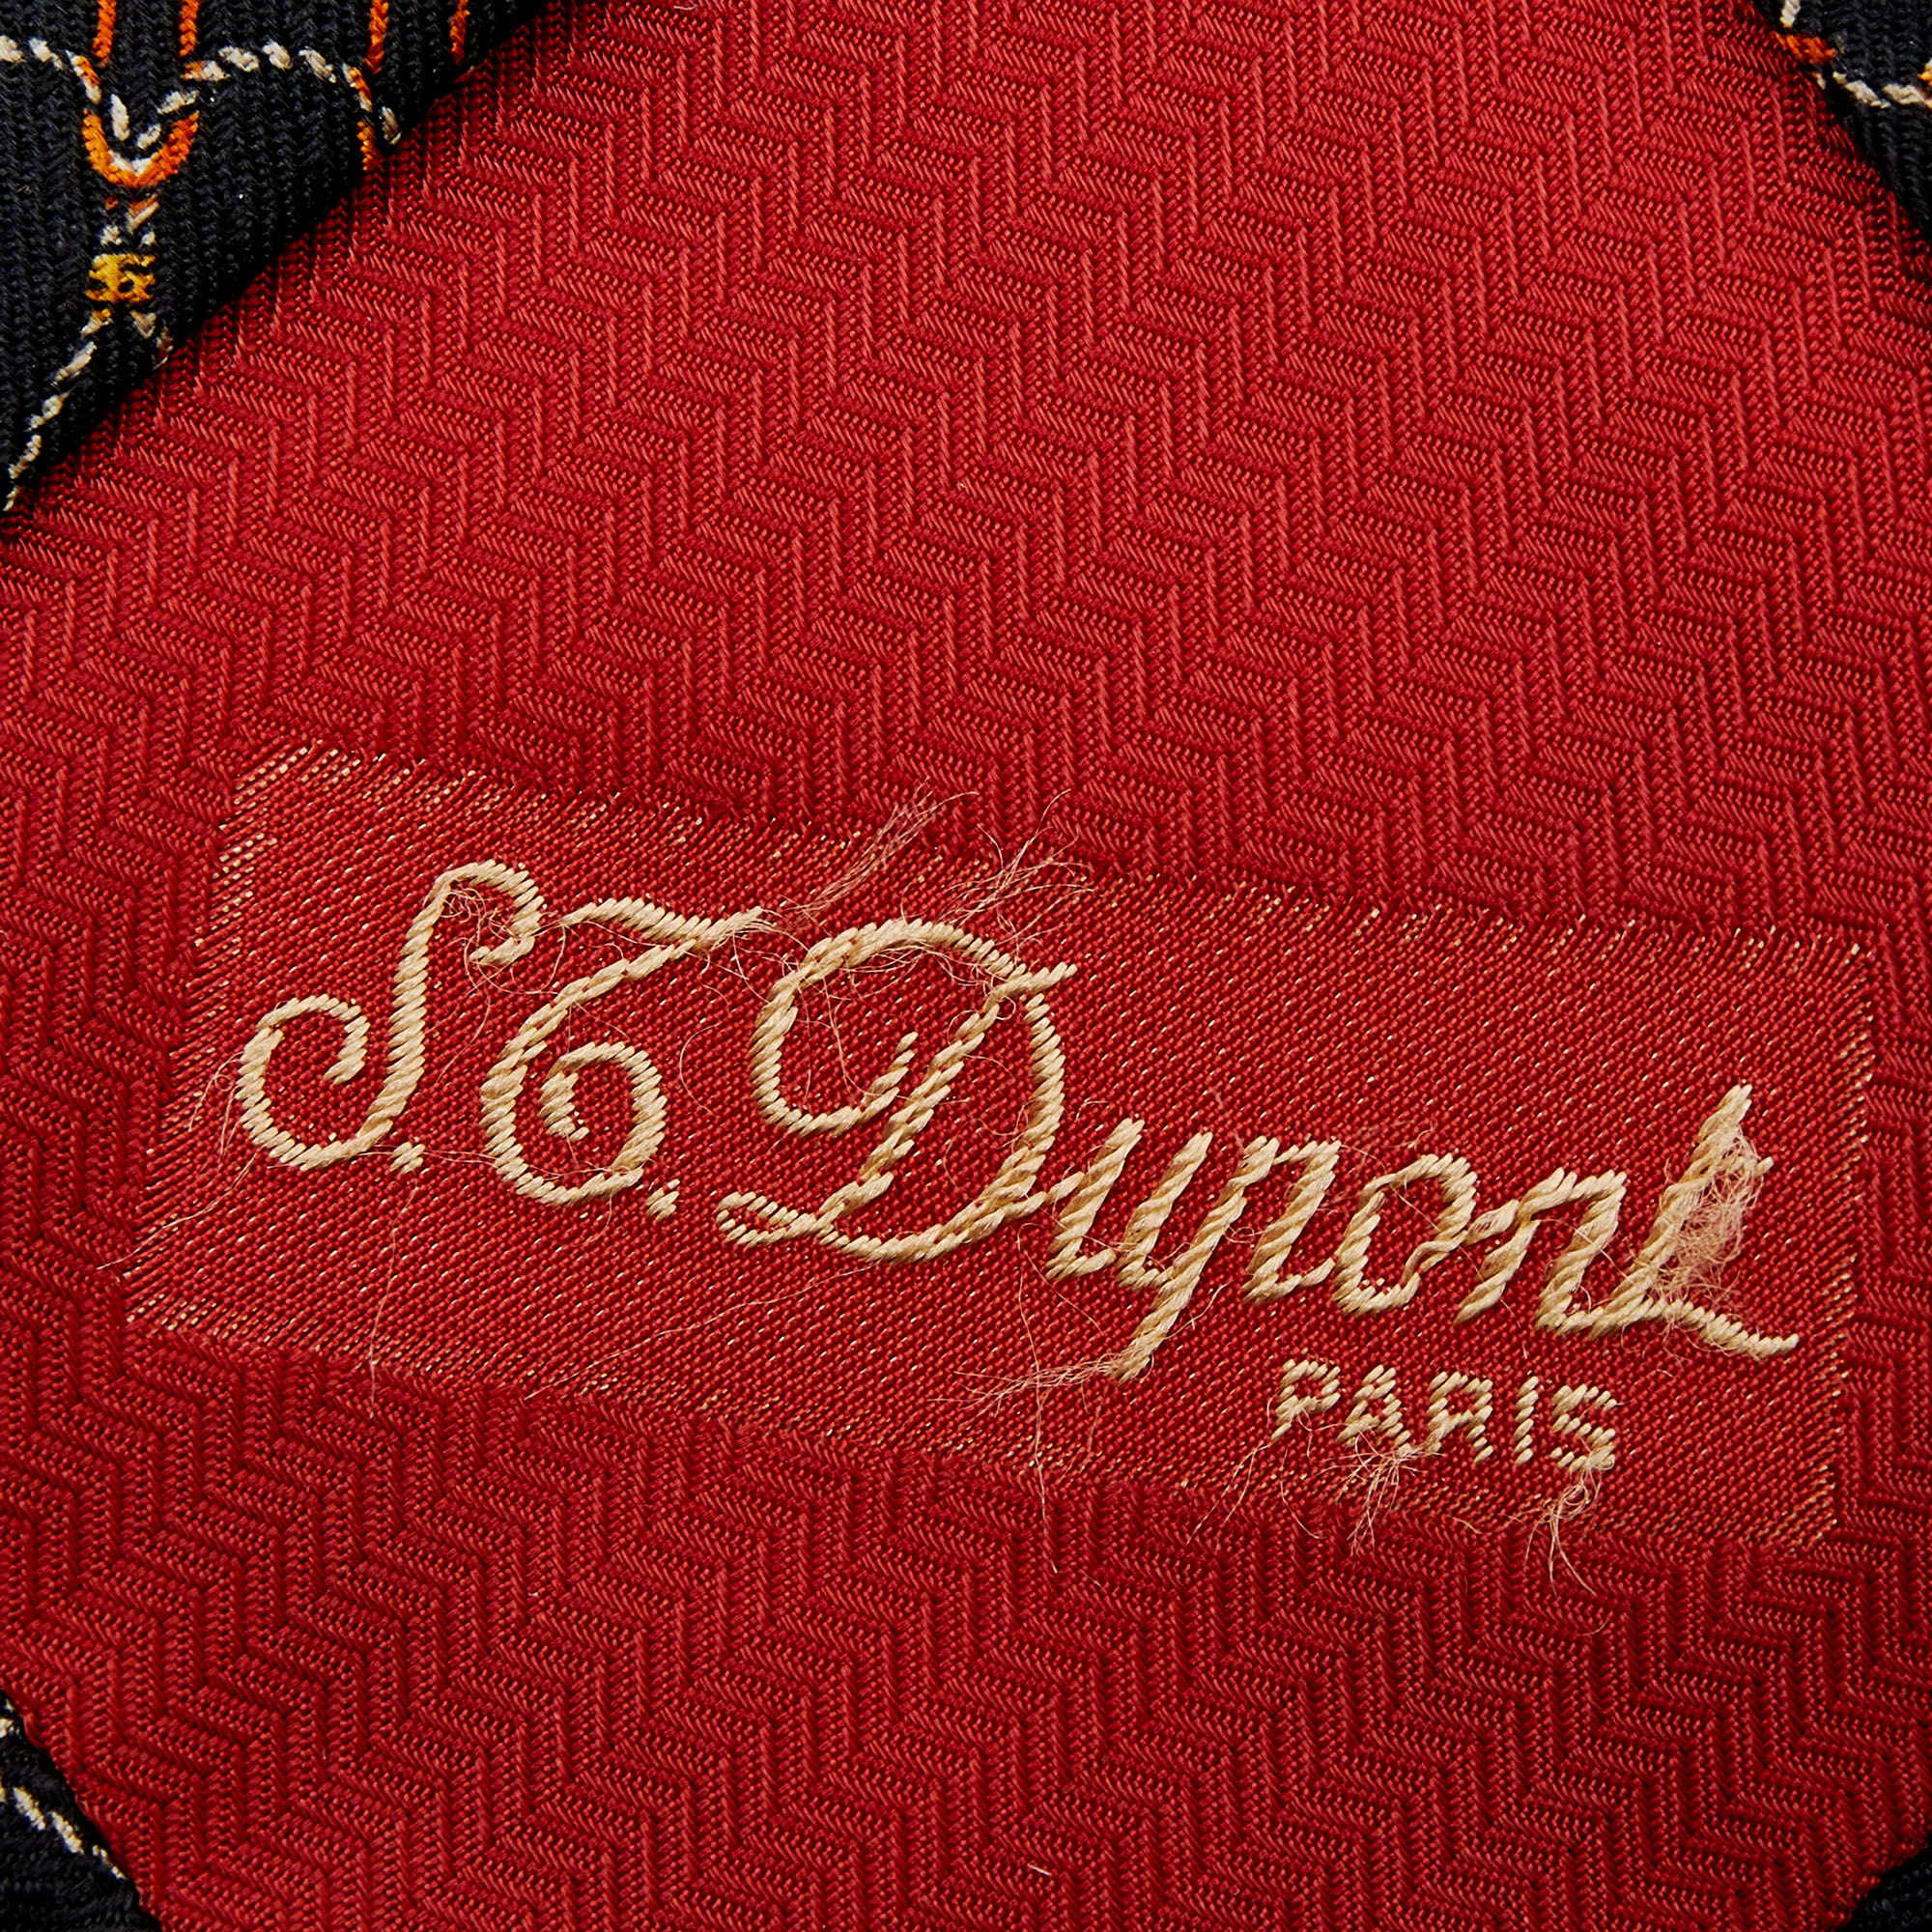 S.T. Dupont Vintage Black Printed Silk Jacquard Tie